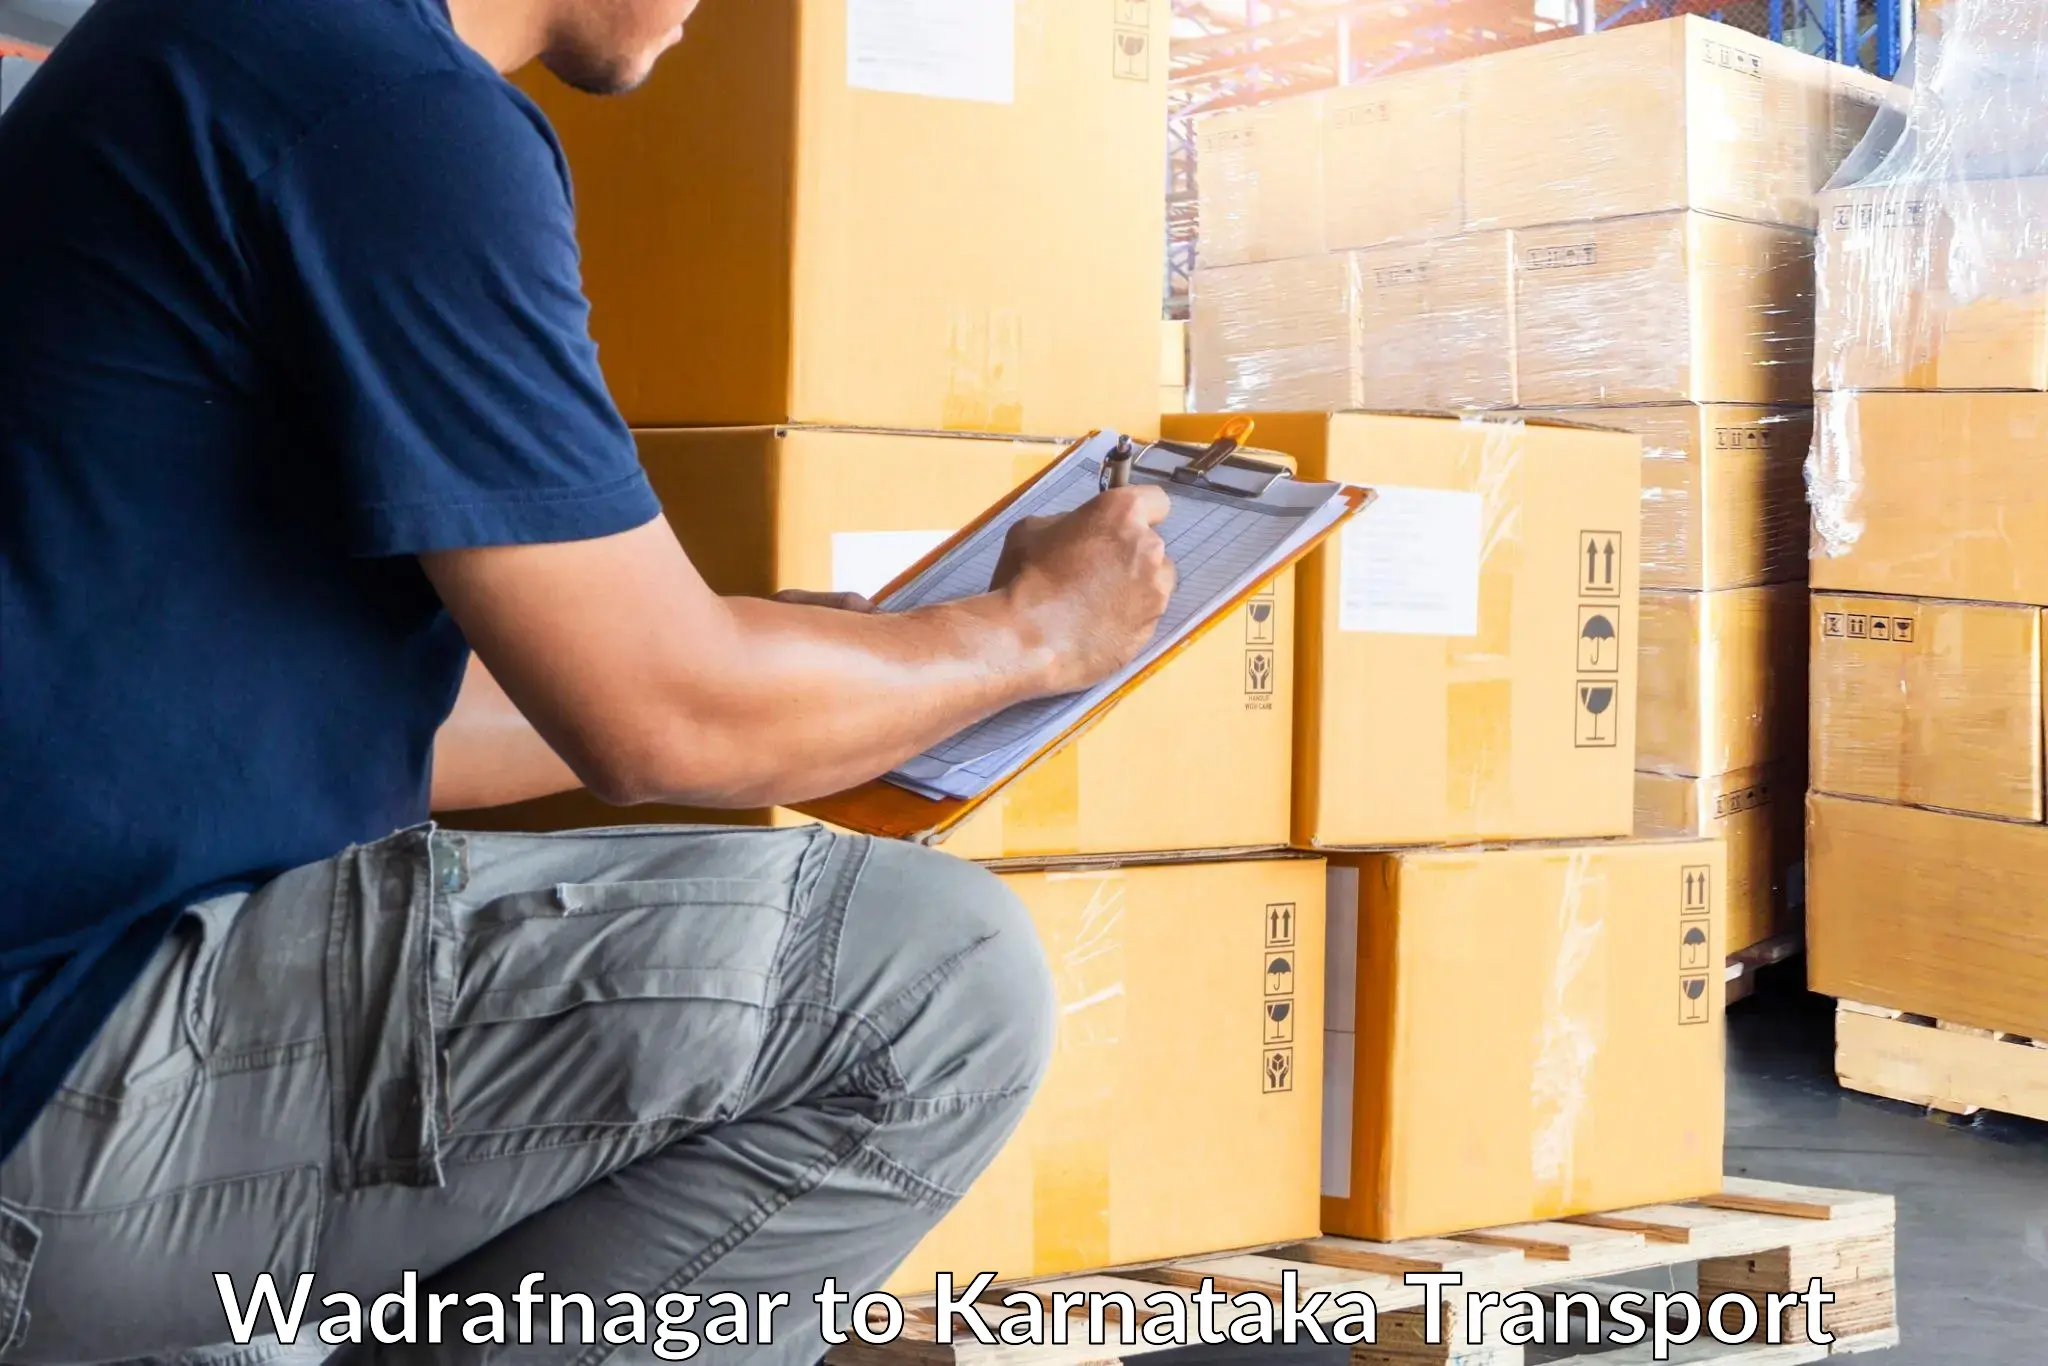 Goods delivery service Wadrafnagar to Gundlupete